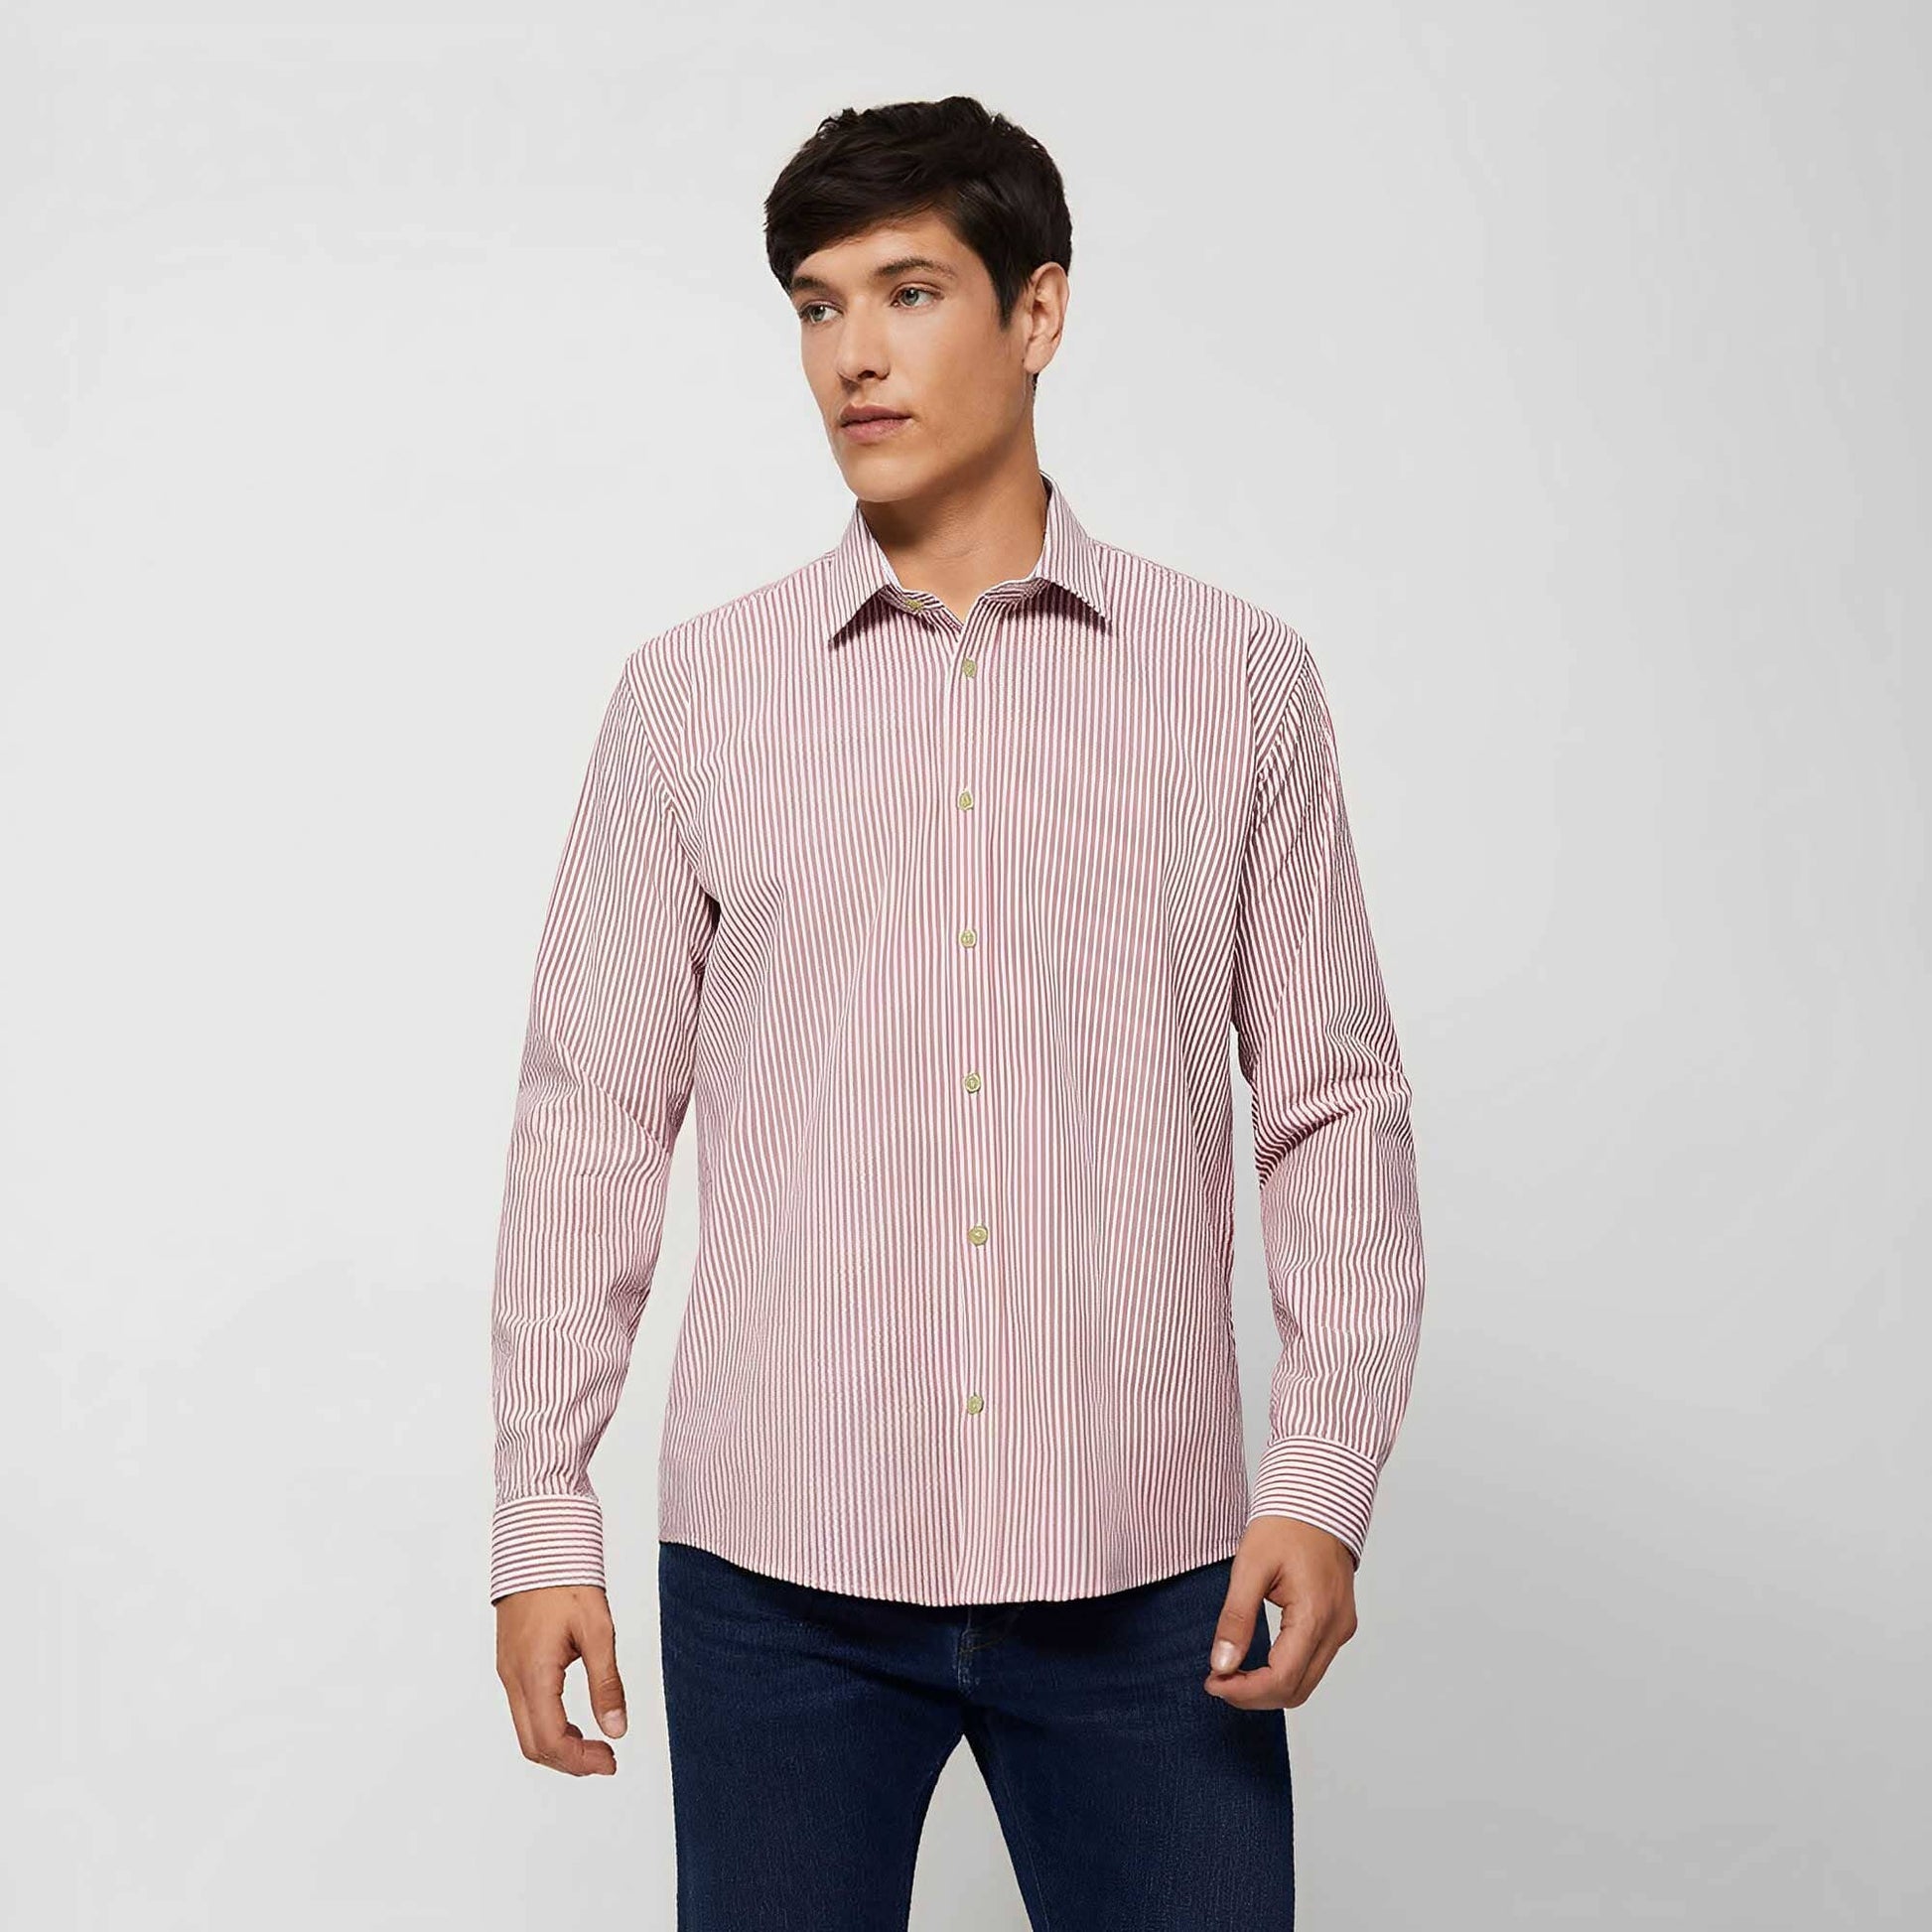 CP Men's Burg Lining Style Regular Fit Casual Shirt Men's Casual Shirt Minhas Garments S 